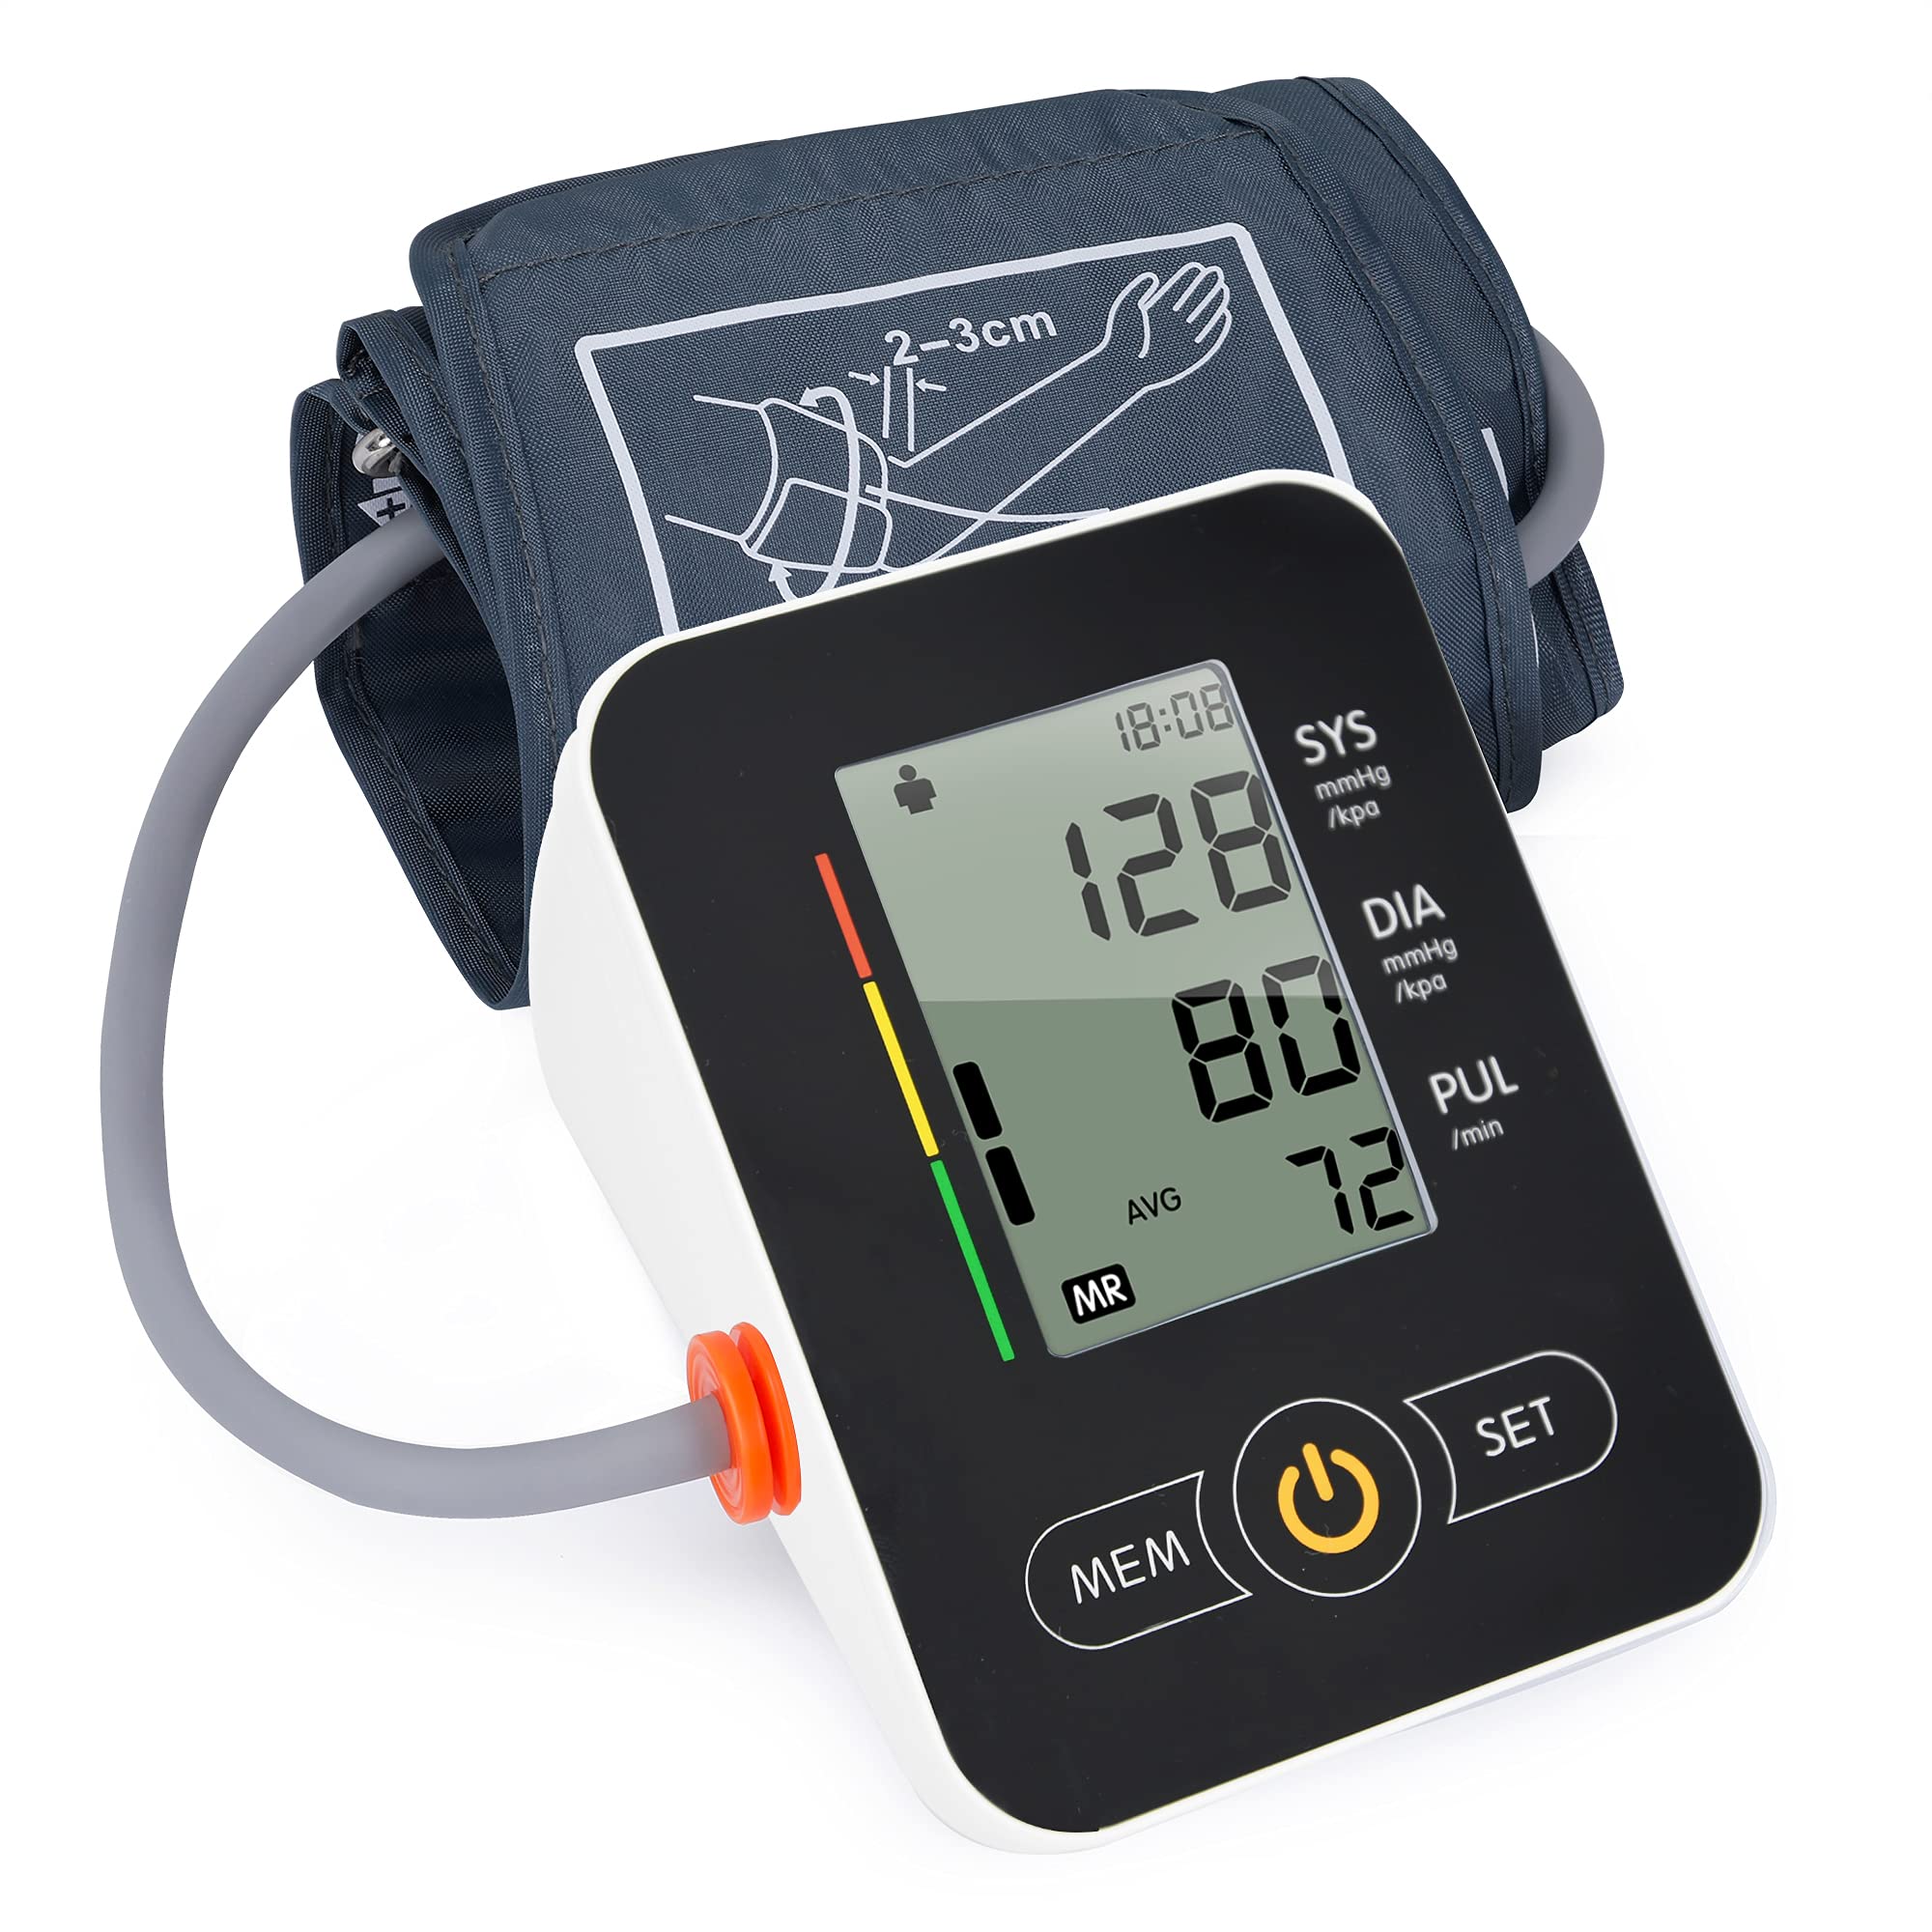 Blood Pressure Monitor, maguja Blood Pressure Machine, BP Monitor Automatic  Upper Arm Cuff Digital with 8.7-17inches High Blood Pressure Cuff for Home